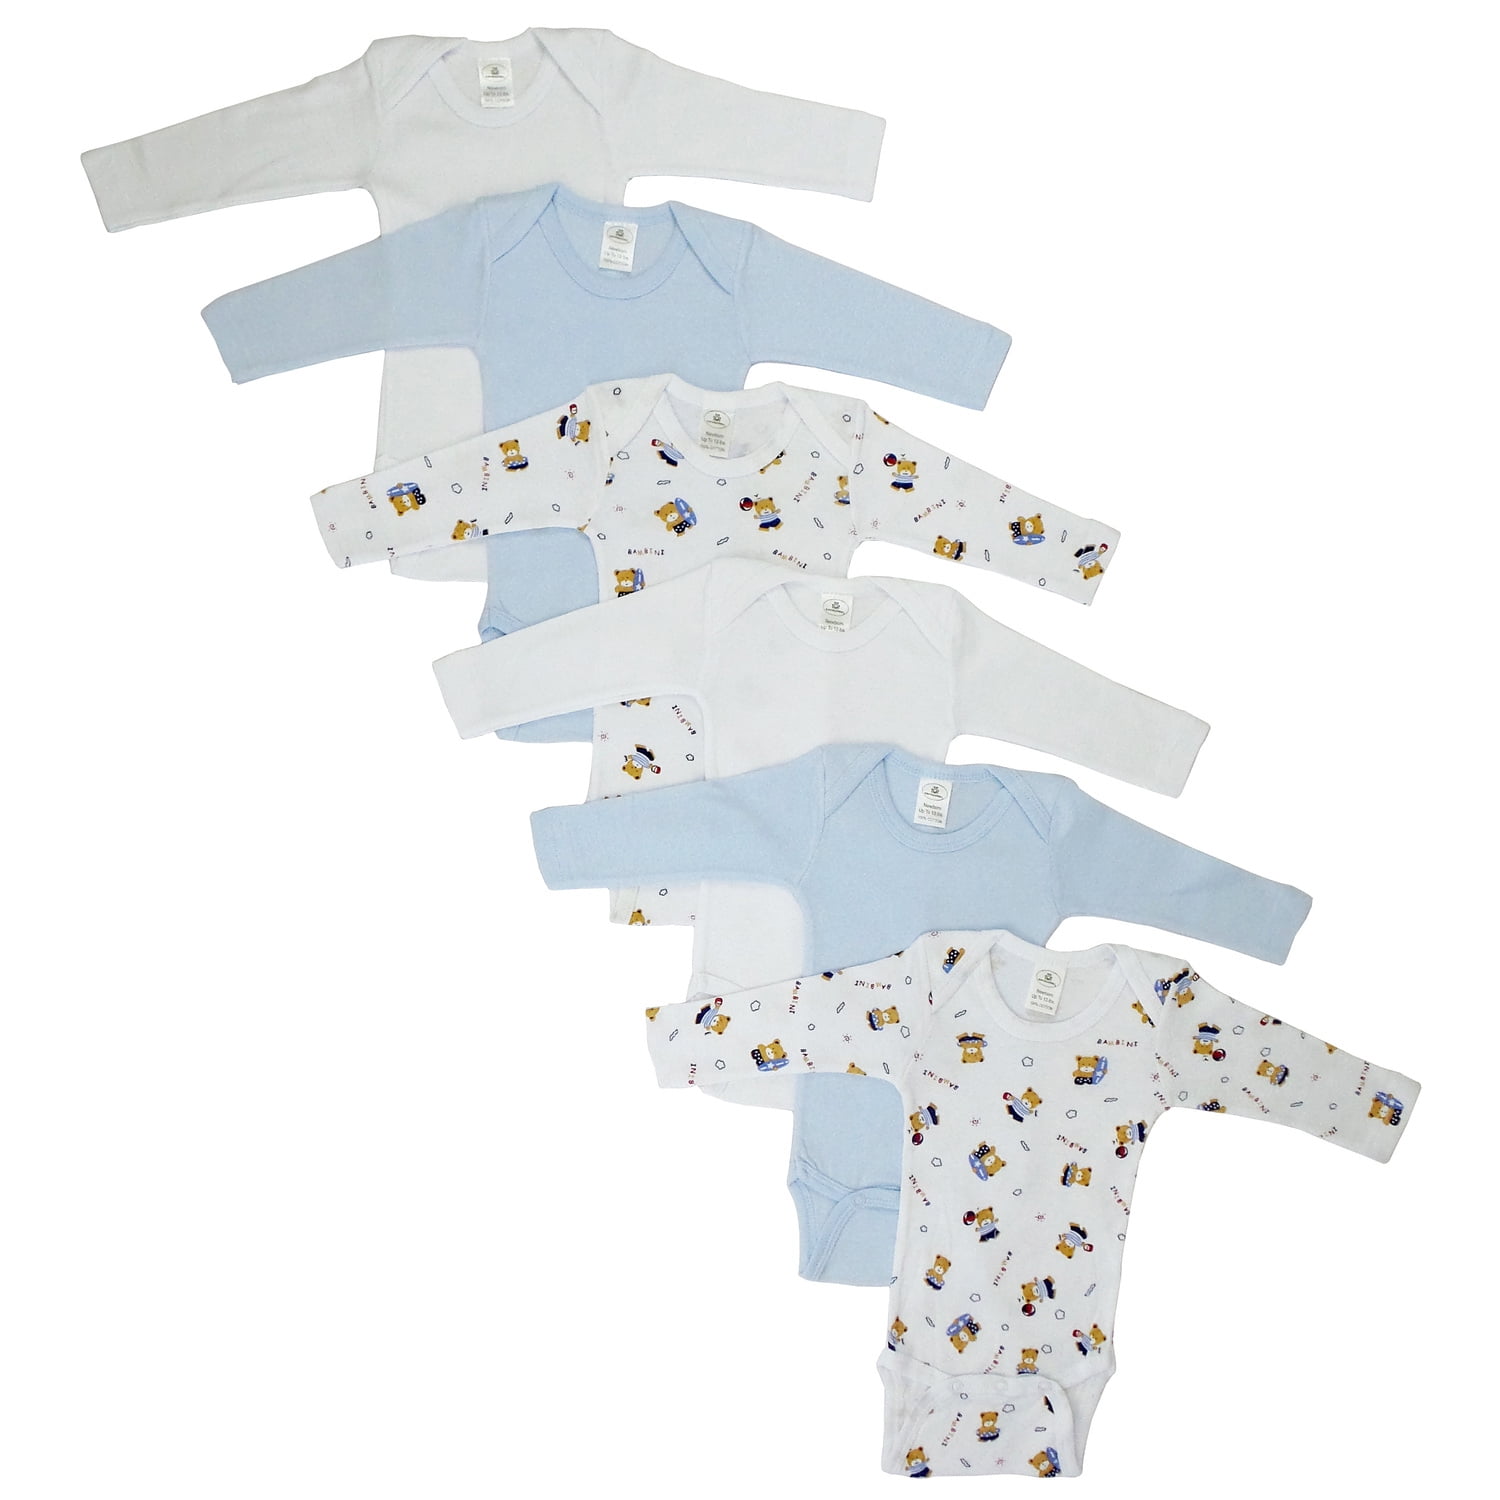 Cs-102nb-bear-102nb-bear Boys Longsleeve Printed Variety, White & Blue - Newborn